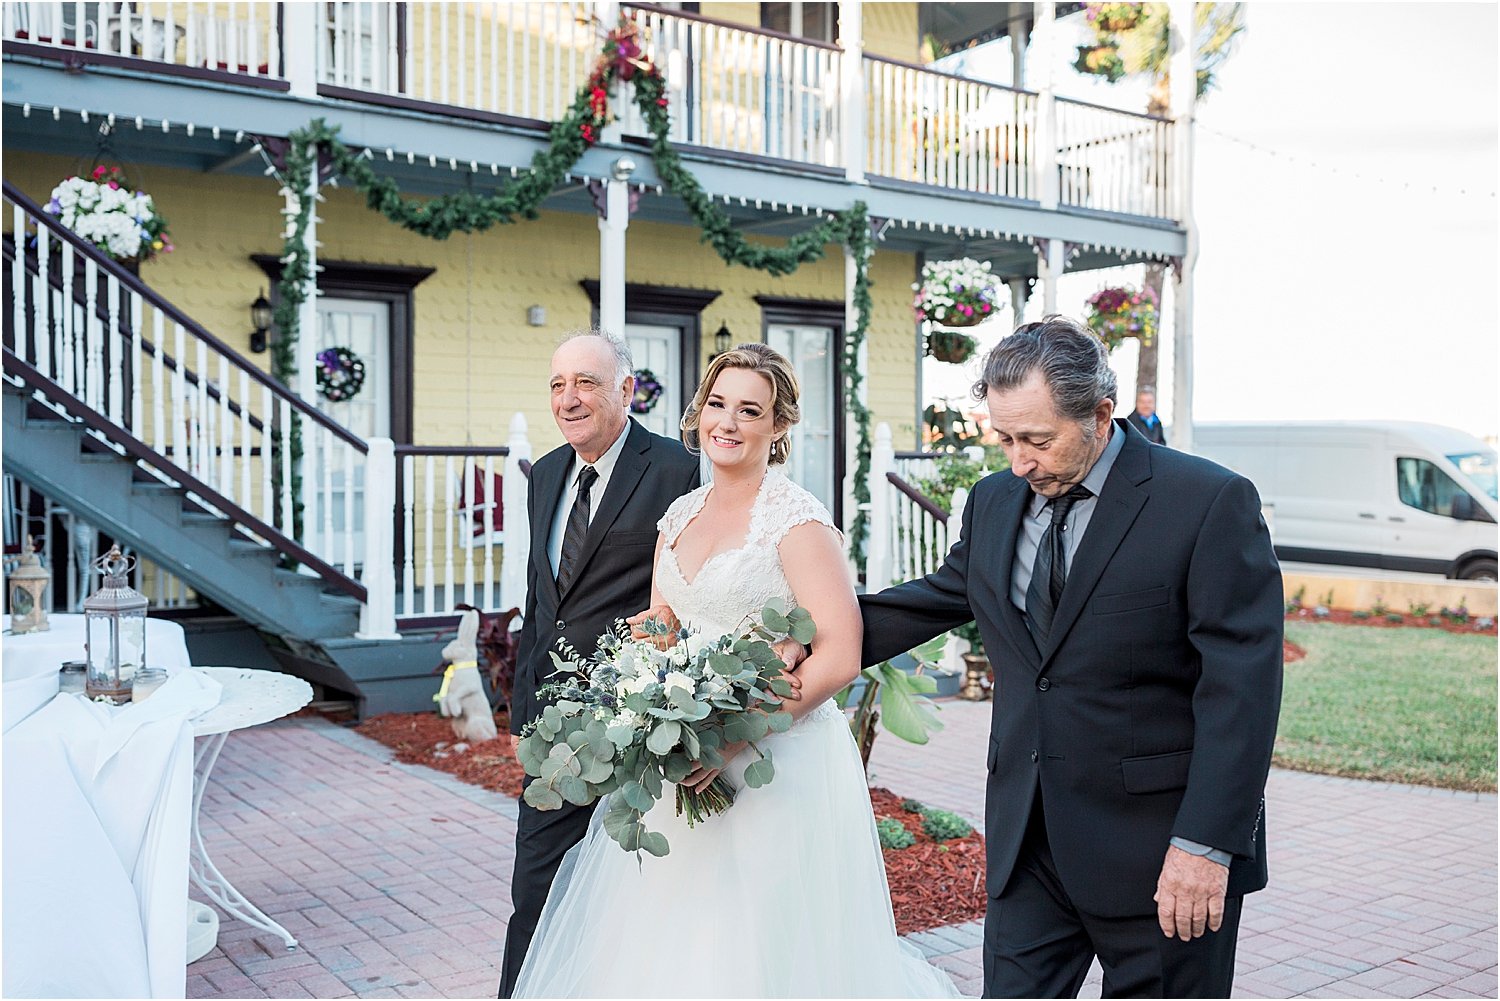 Kasey and Tyler's Wedding at Bayfront Marin St. Augustine, Florida- Jacksonville, Ponte Vedra Beach, St. Augustine, Amelia Island, Florida and Destination Fine Art Film Wedding Photography_0014.jpg